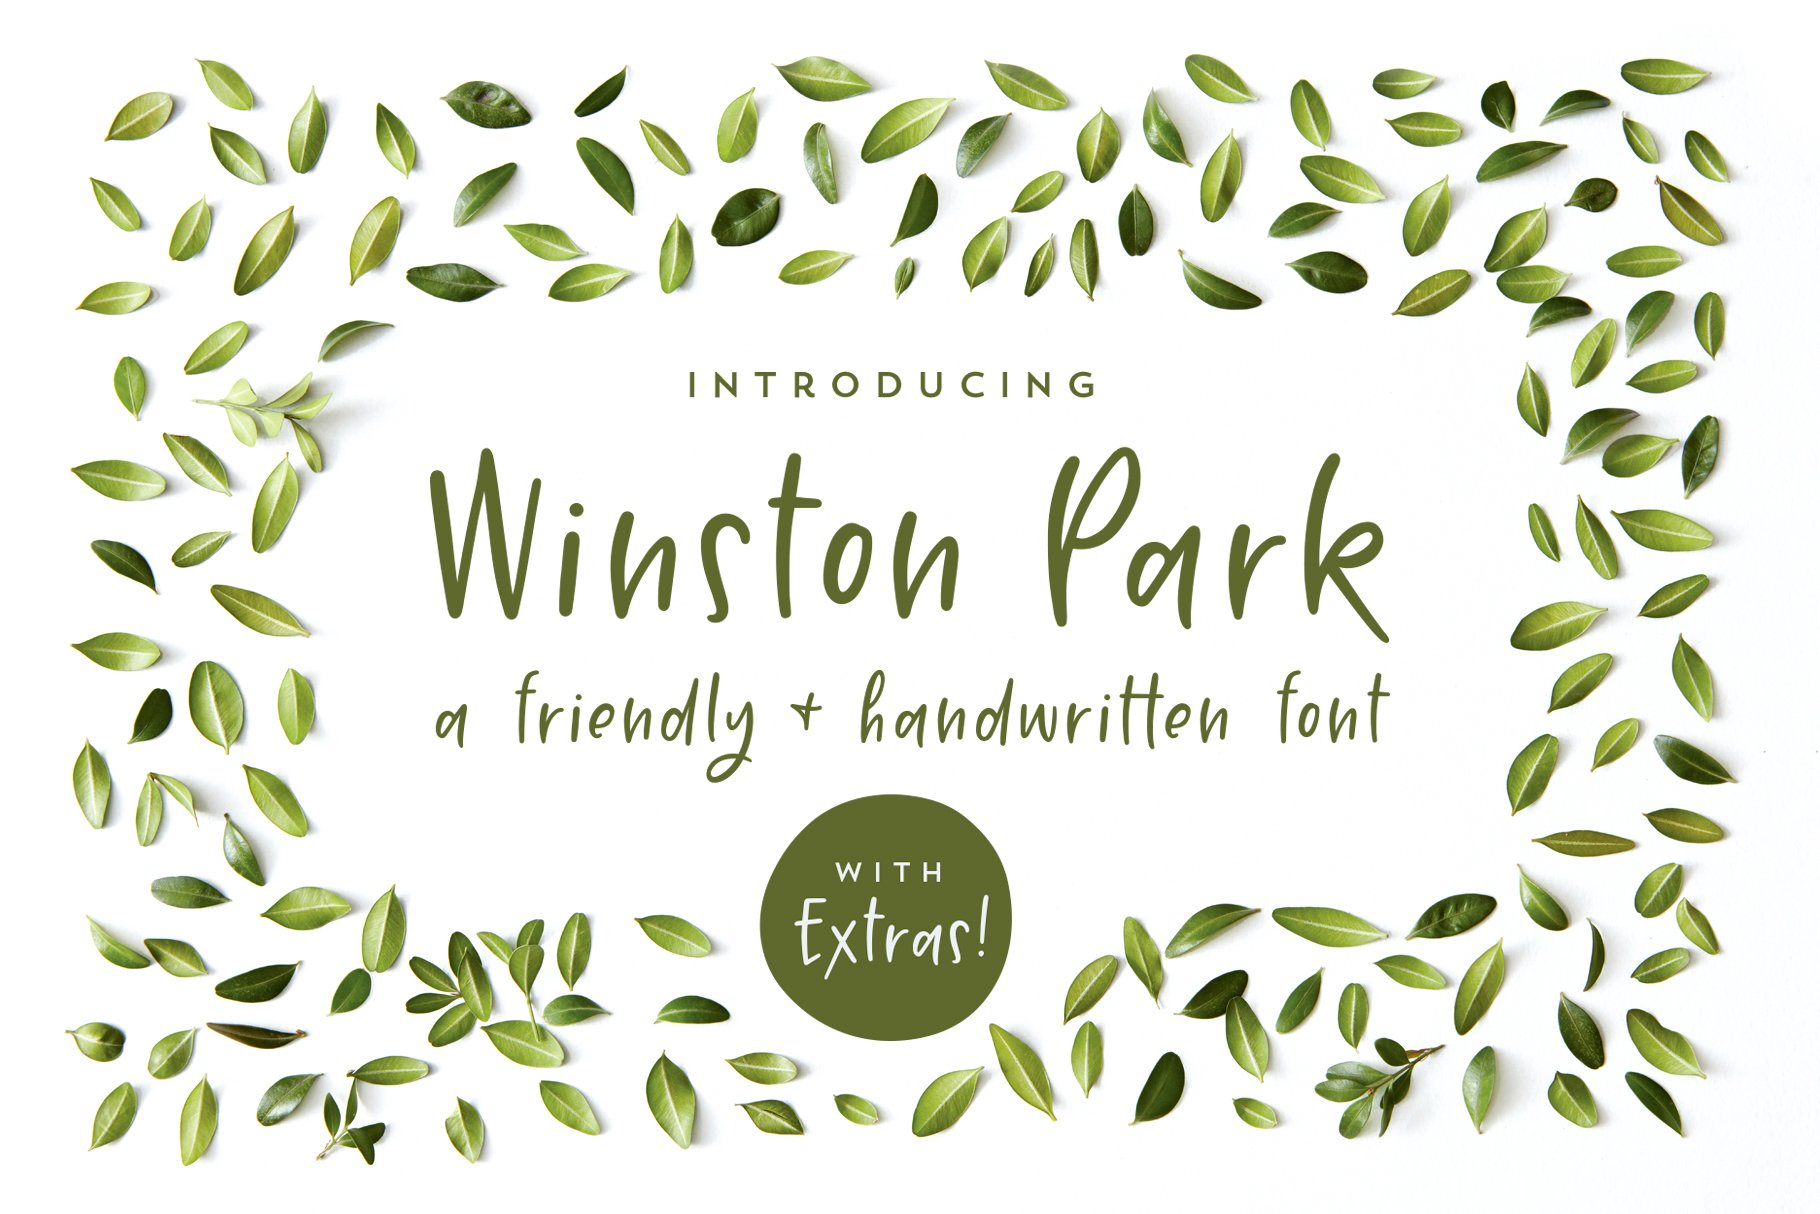 Winston Park | A Handwritten Font cover image.